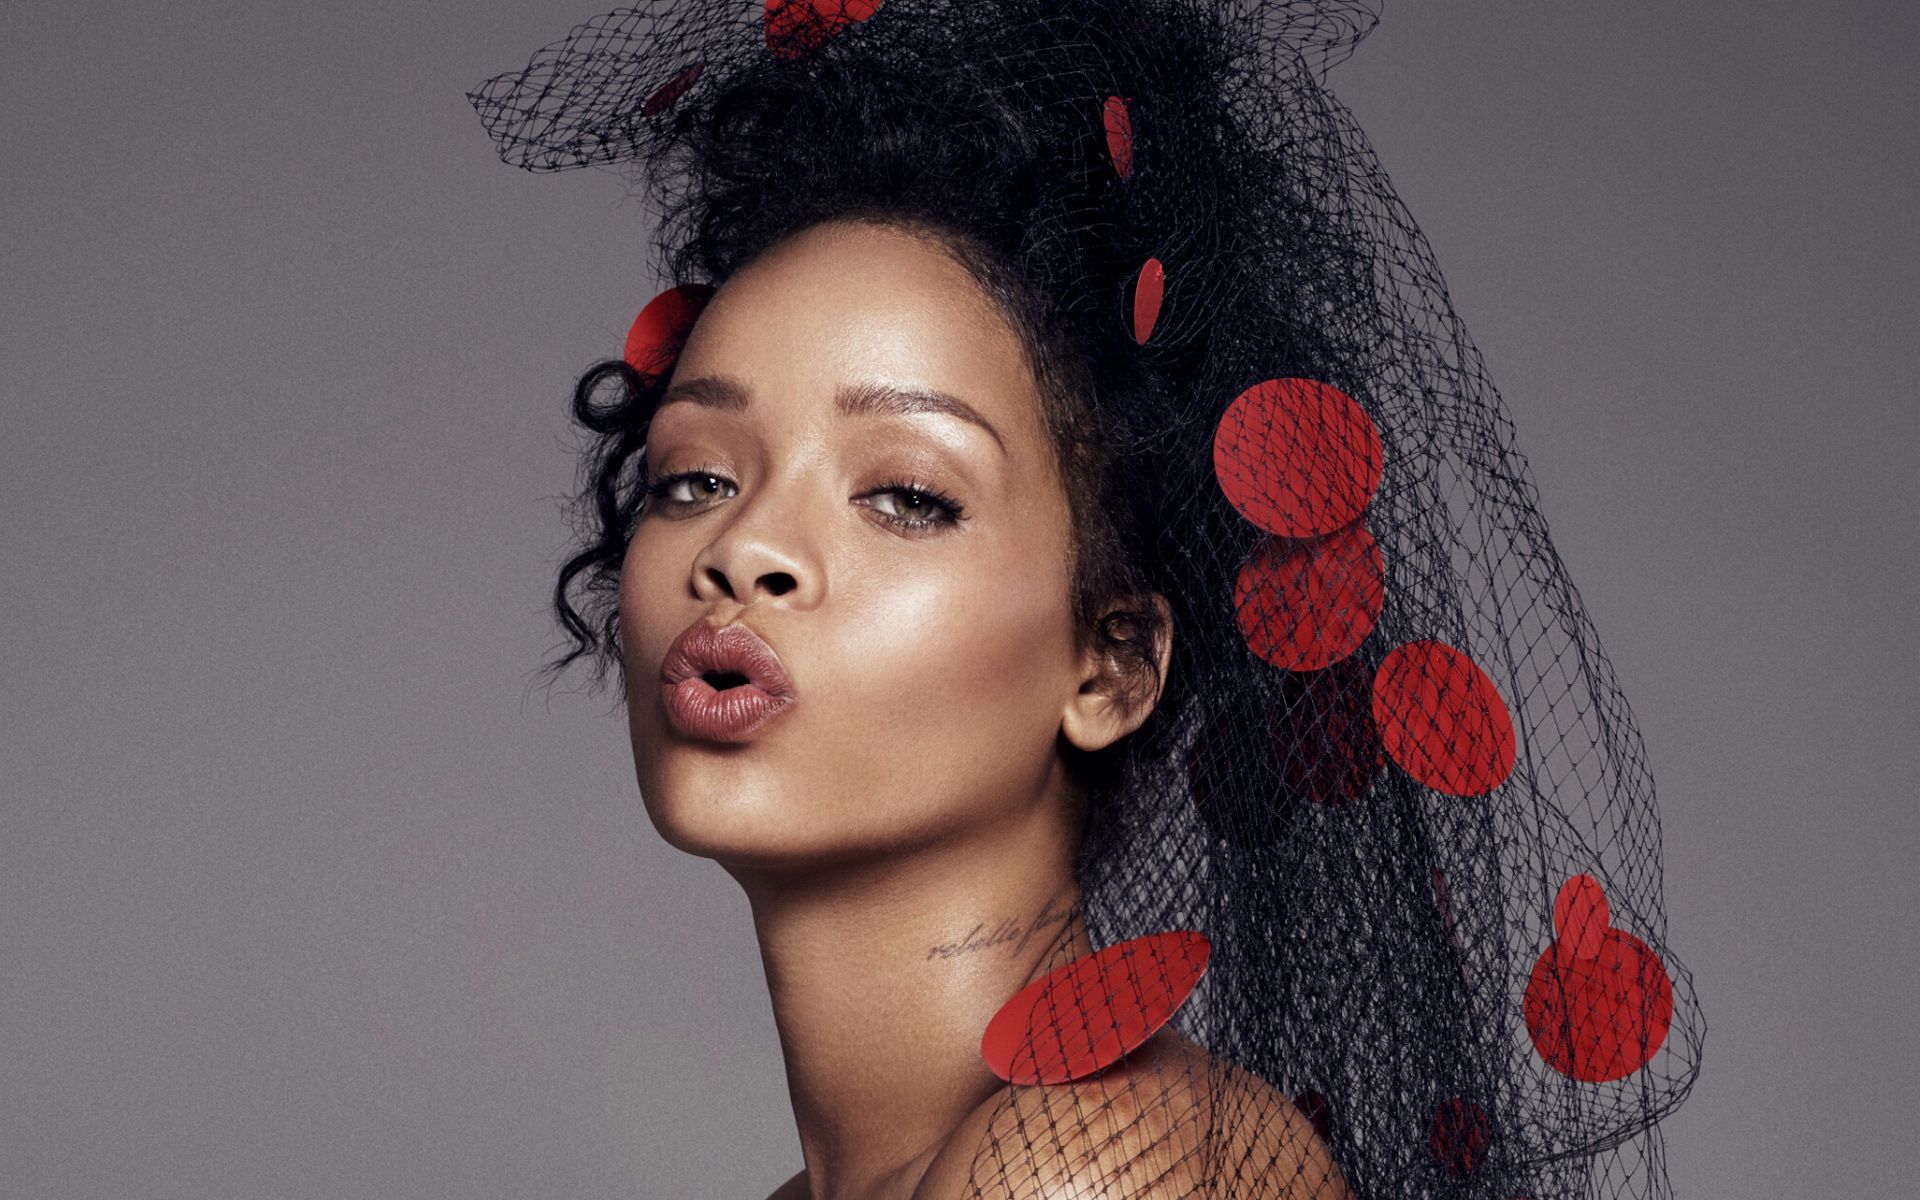 Rihanna is the first black woman to headline Coachella, and the first woman to headline the festival in 12 years. - Rihanna